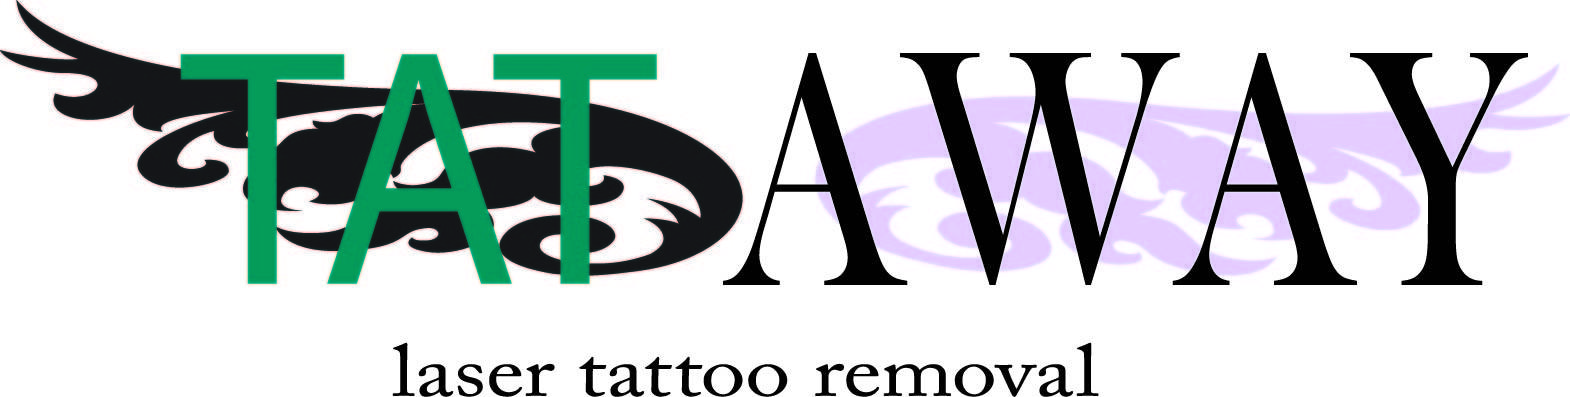 Artsy Logo - Entry By Myworldmarijna For Design A Logo For An Artsy Spa Laser